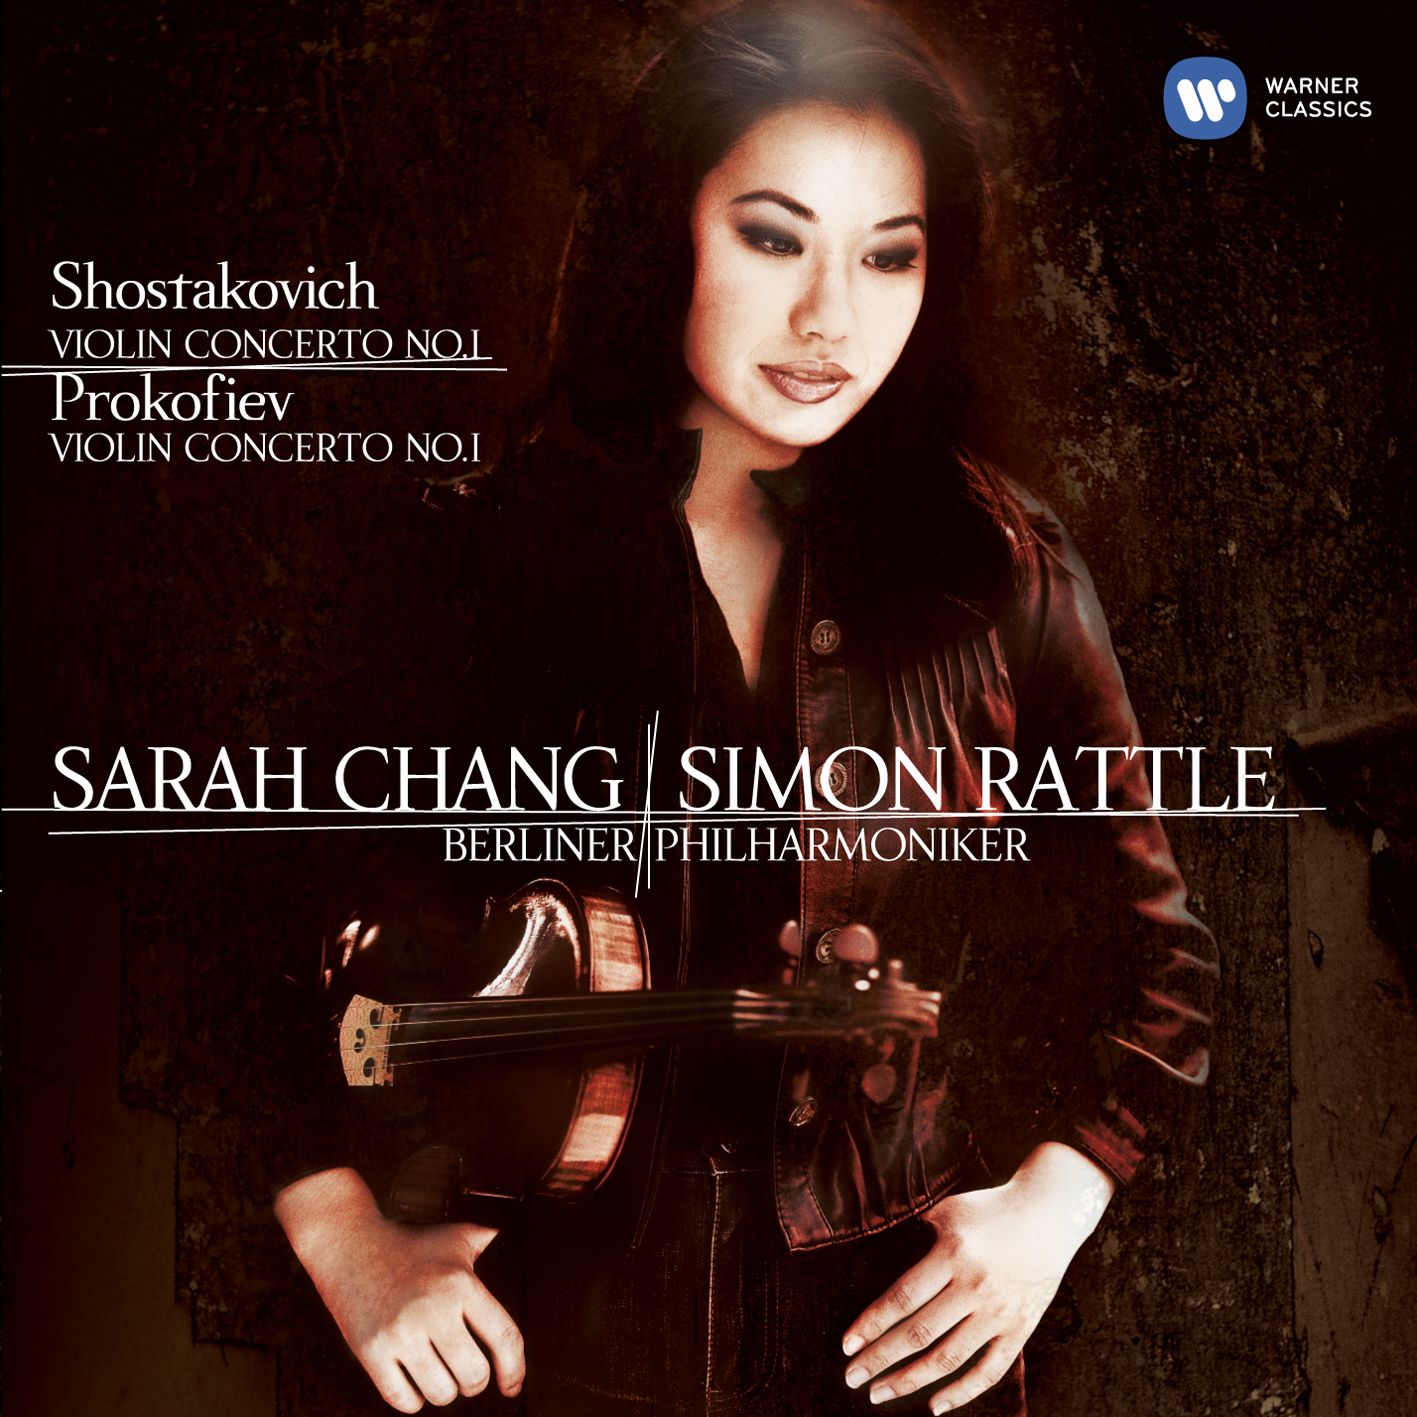 Shostakovich & Prokofiev: Violin Concertos". Album of Sir Simon Rattle feat. Sarah Chang buy or stream. |